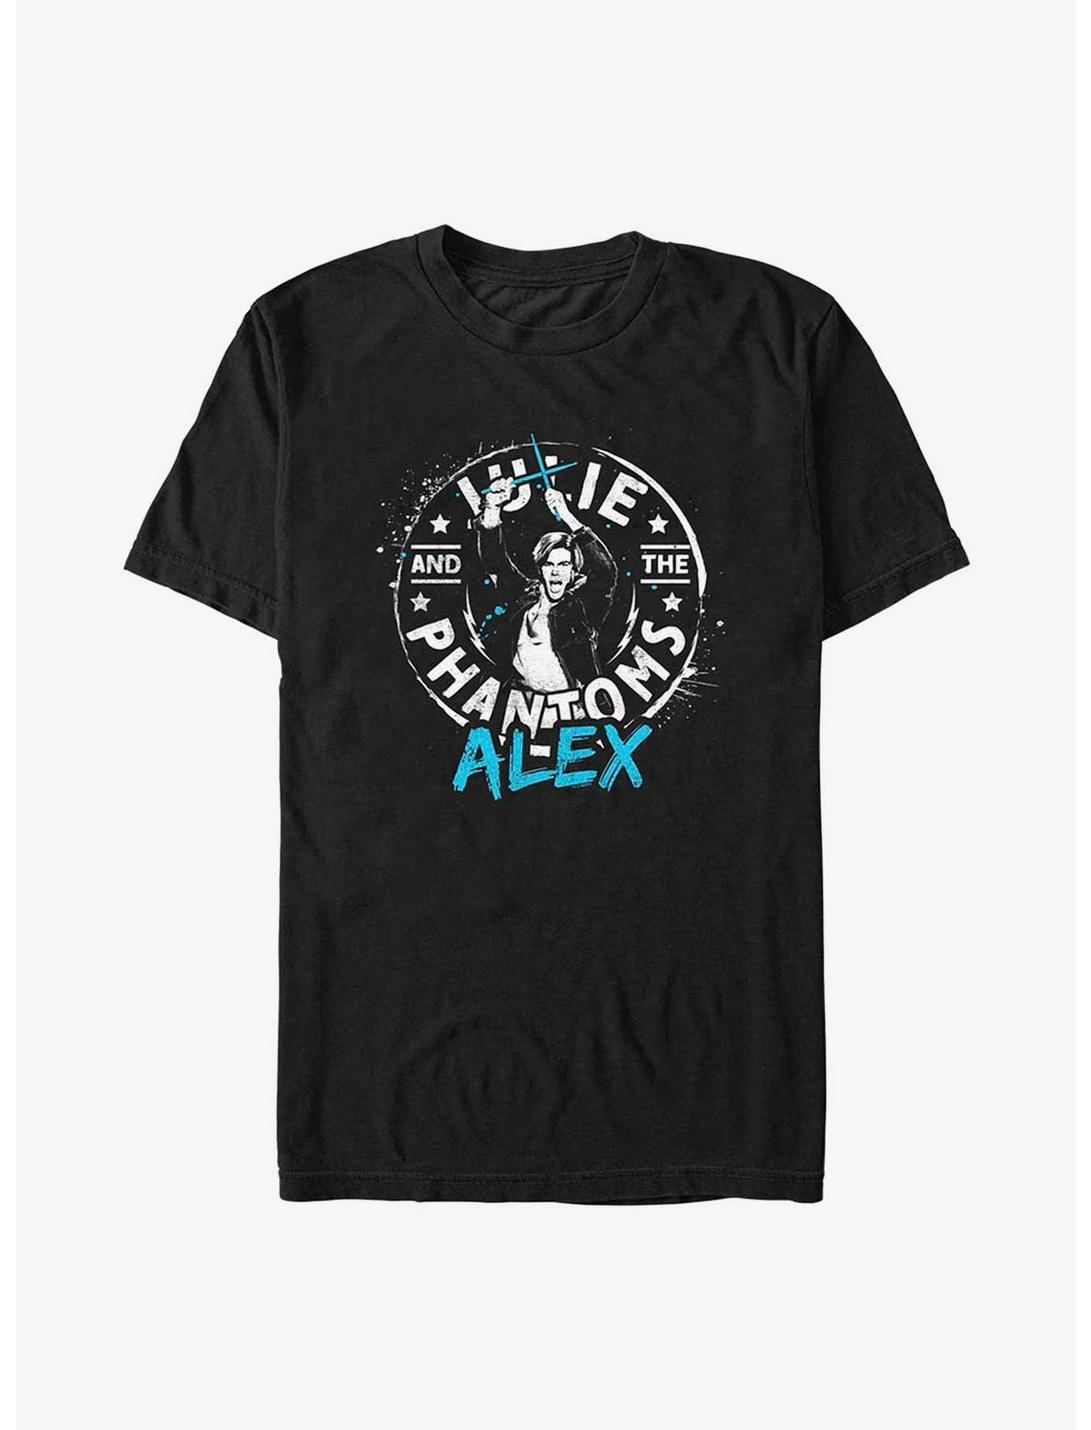 Julie And The Phantoms Alex Grunge T-Shirt, BLACK, hi-res